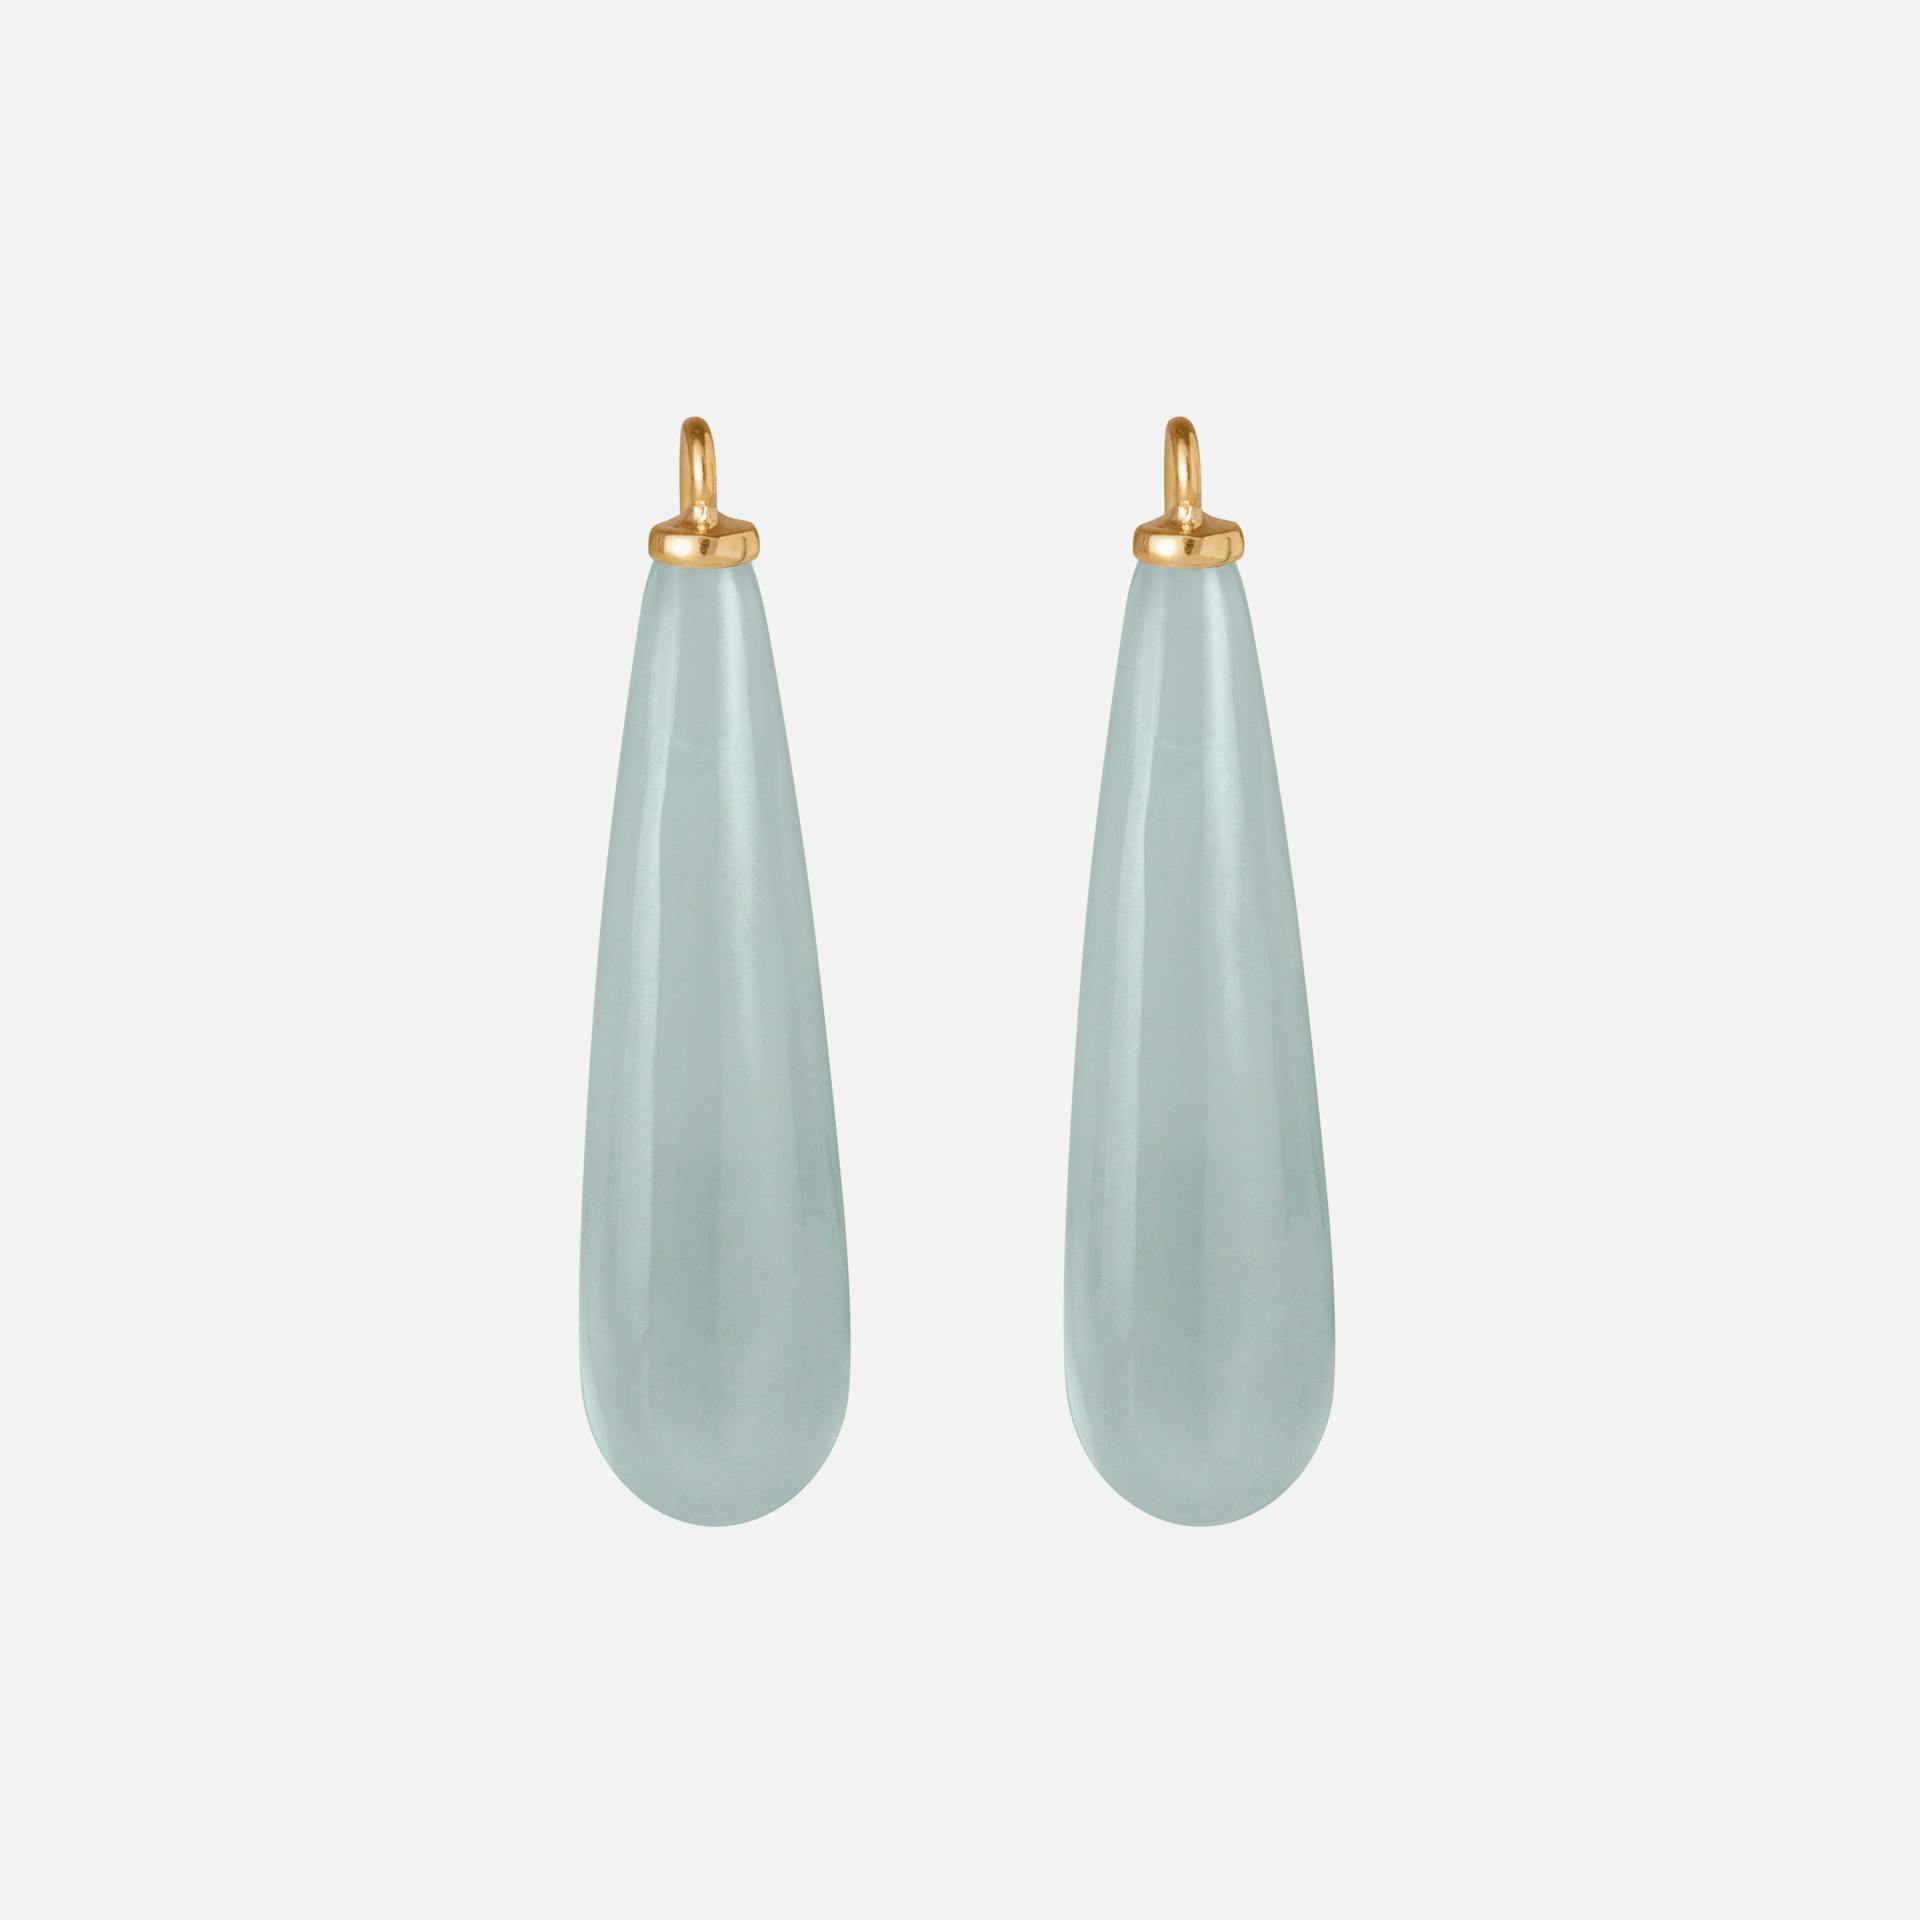 Earring pendant drop 18k gold with aquamarine